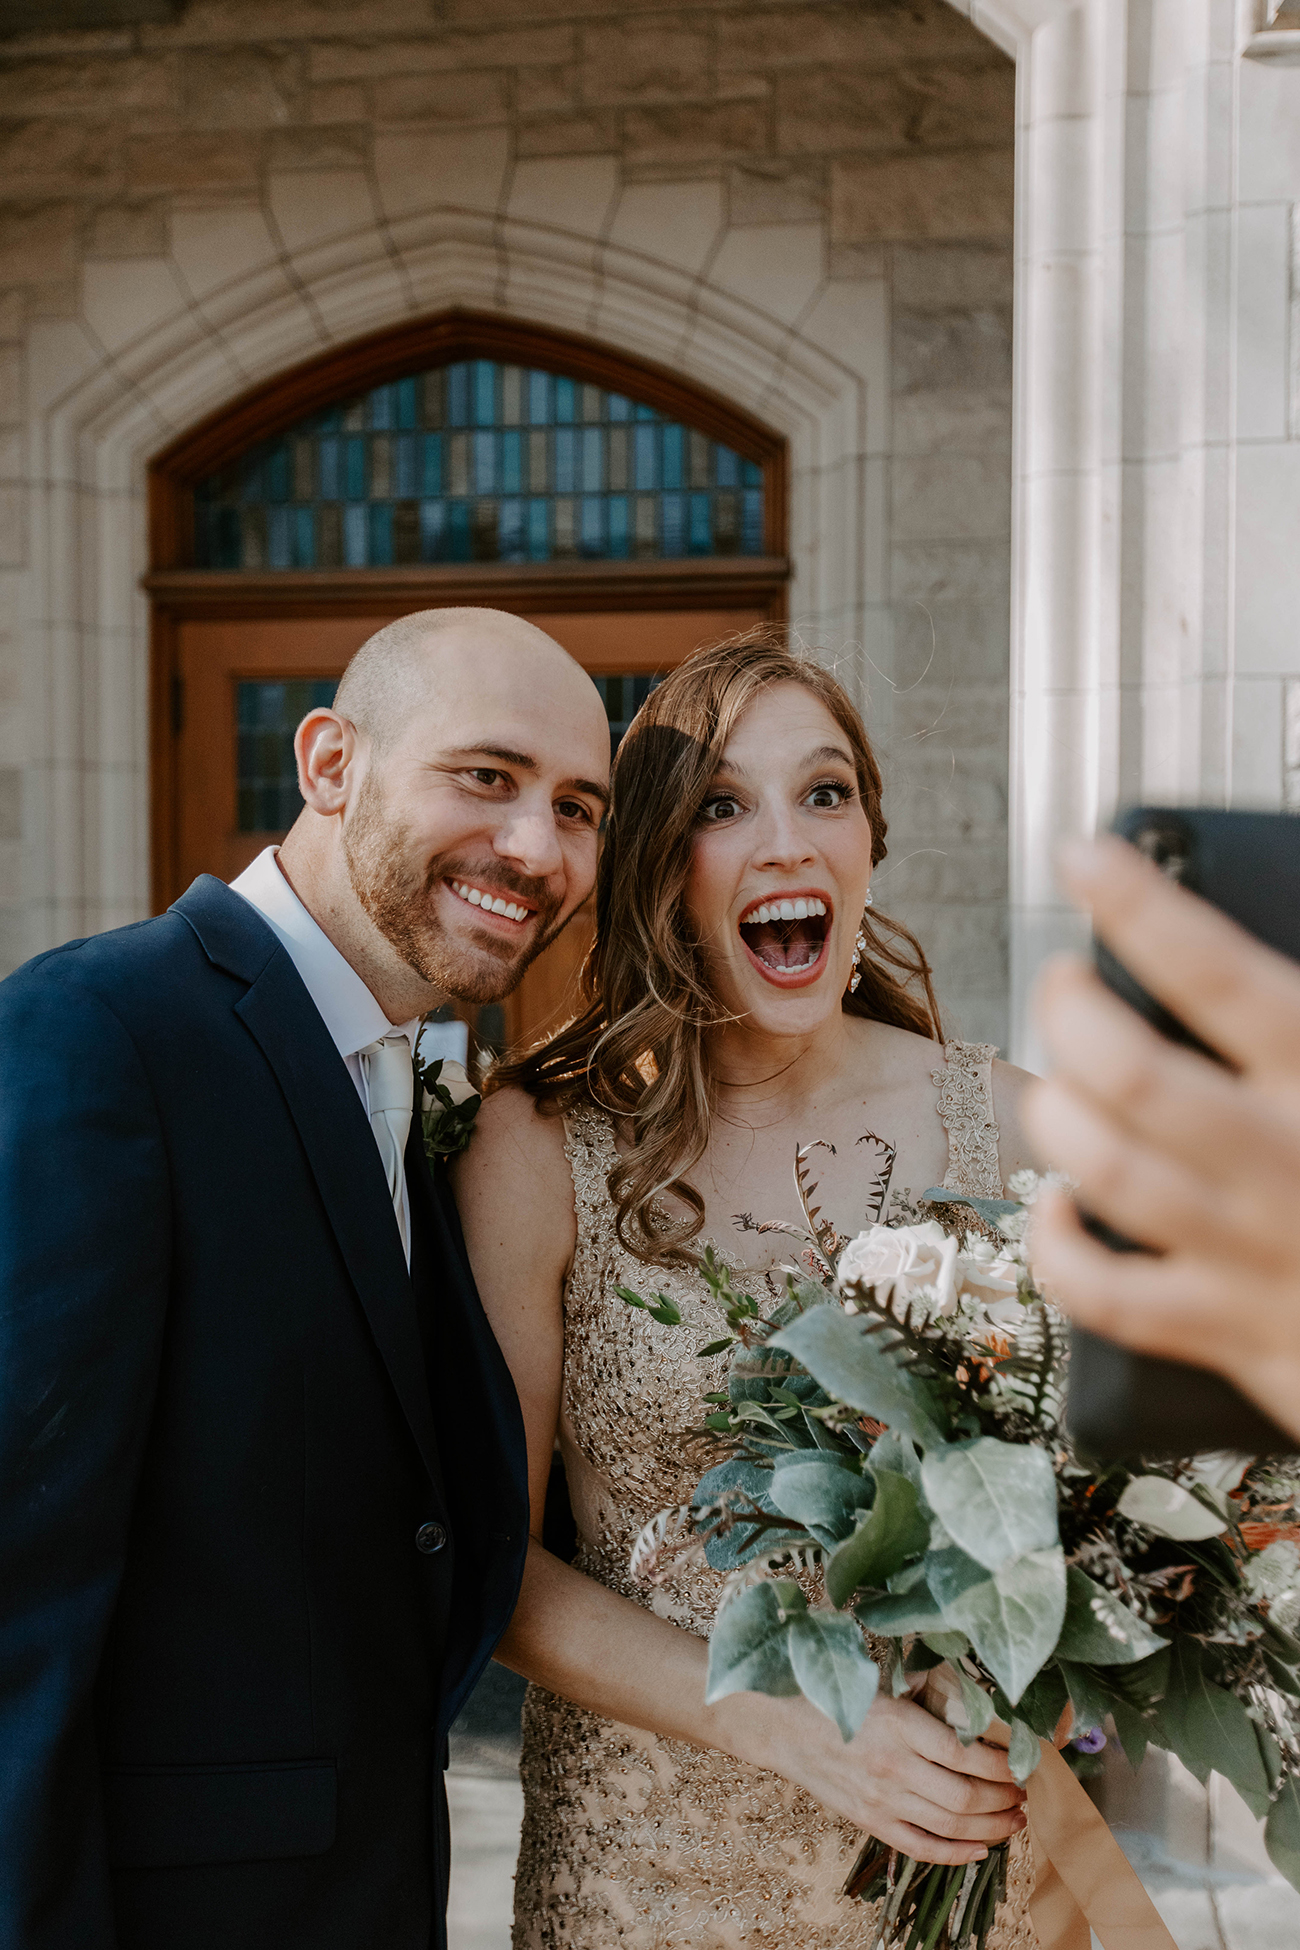 How to Livestream Your Wedding